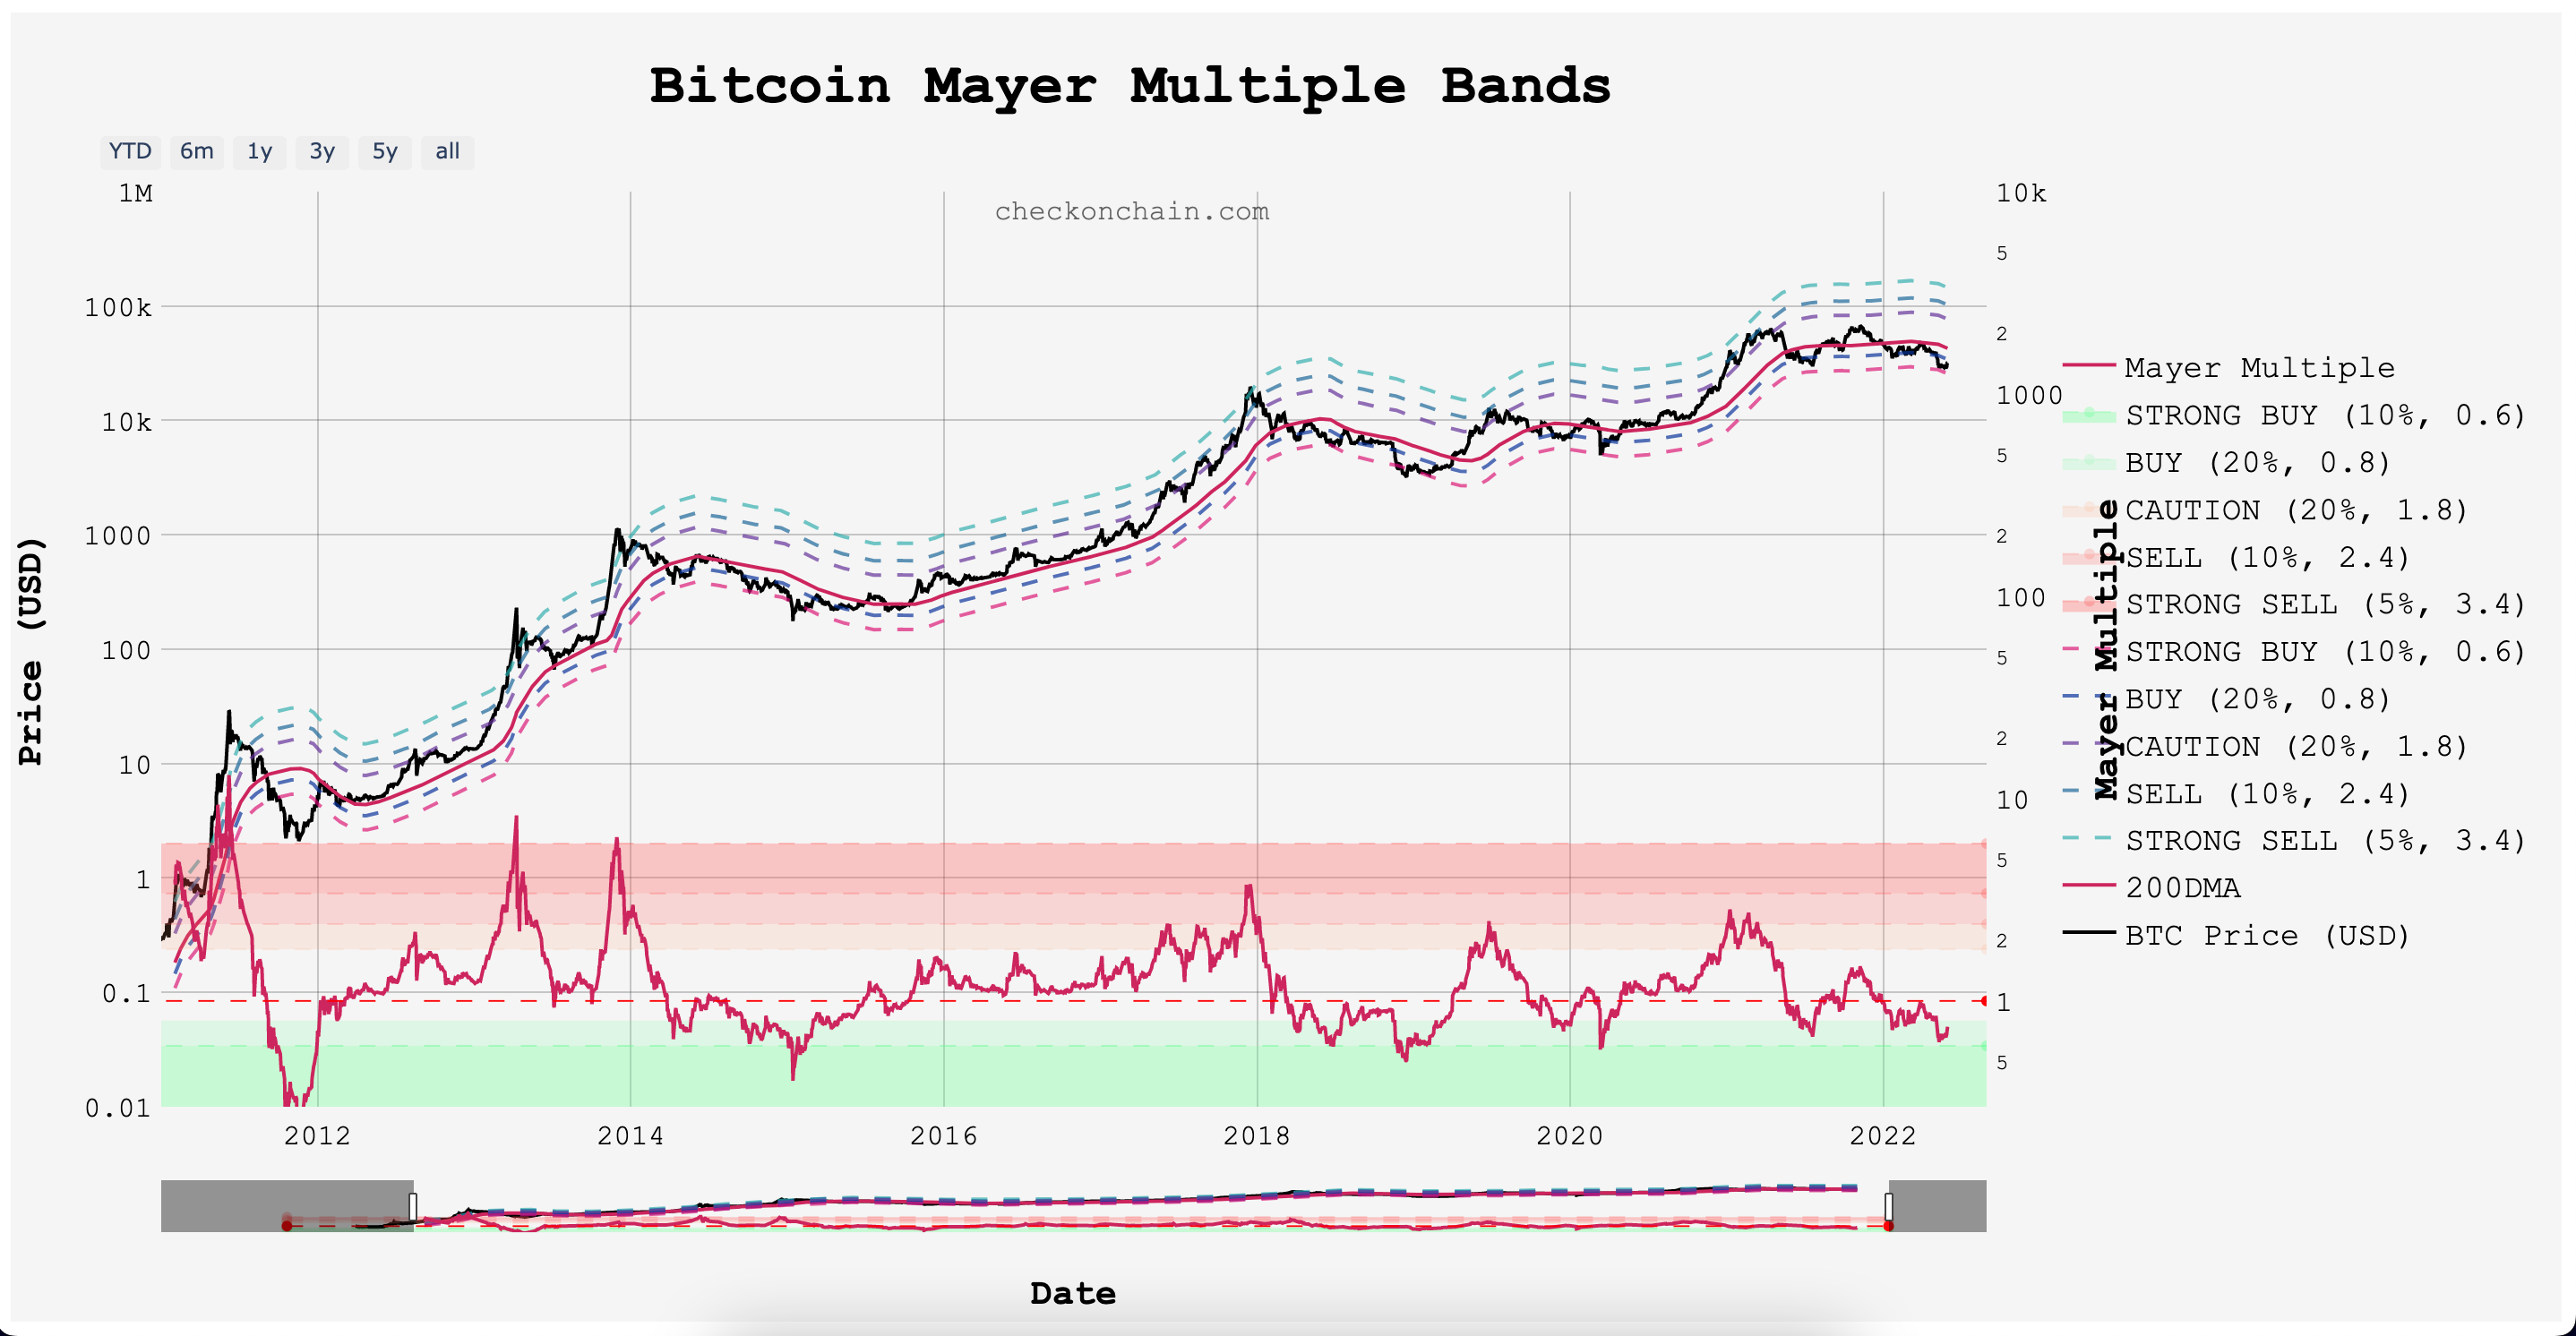 bitcoin mayer multiple bands ekran resmi 2022 06 06 12.59.27